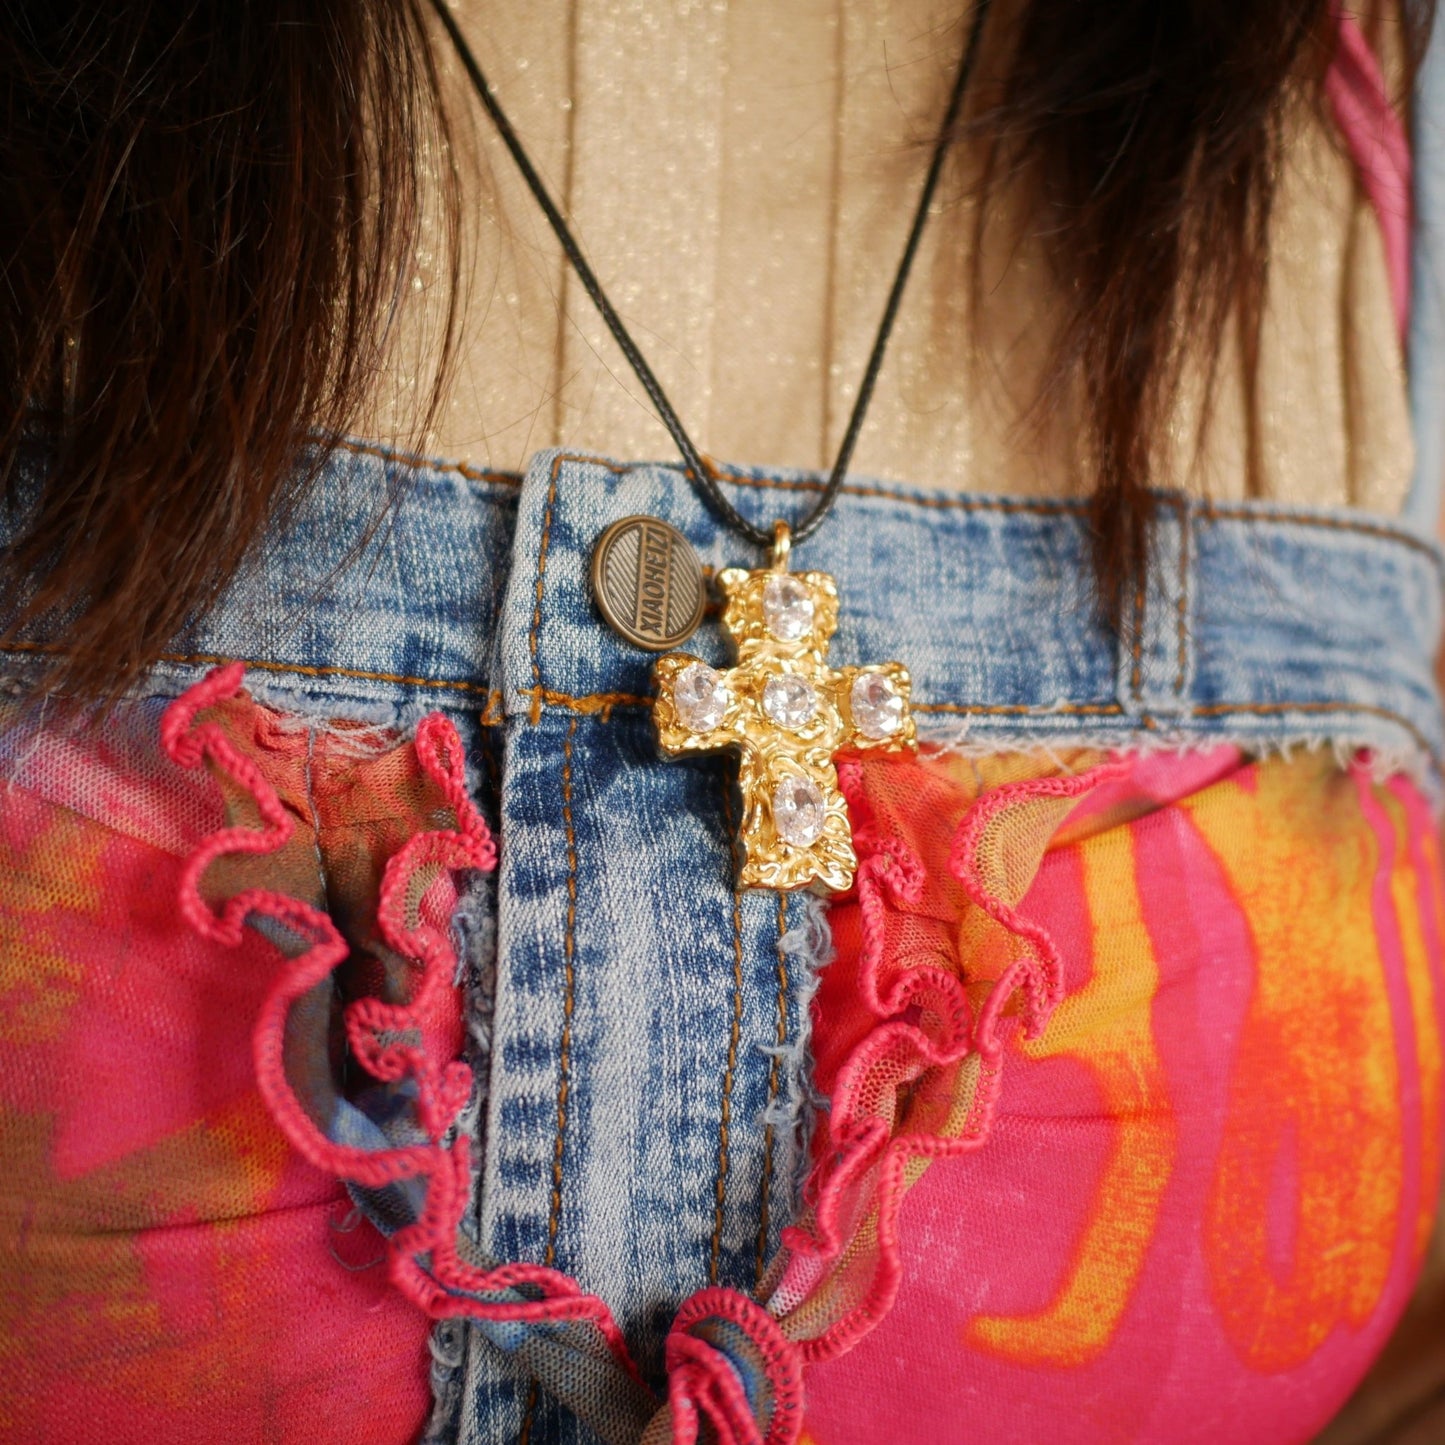 Jupiter cross necklace - 𝐇𝐨𝐧𝐞𝐲 𝐁𝐮𝐭𝐭𝐞𝐫 𝐍𝐢𝐧𝐞